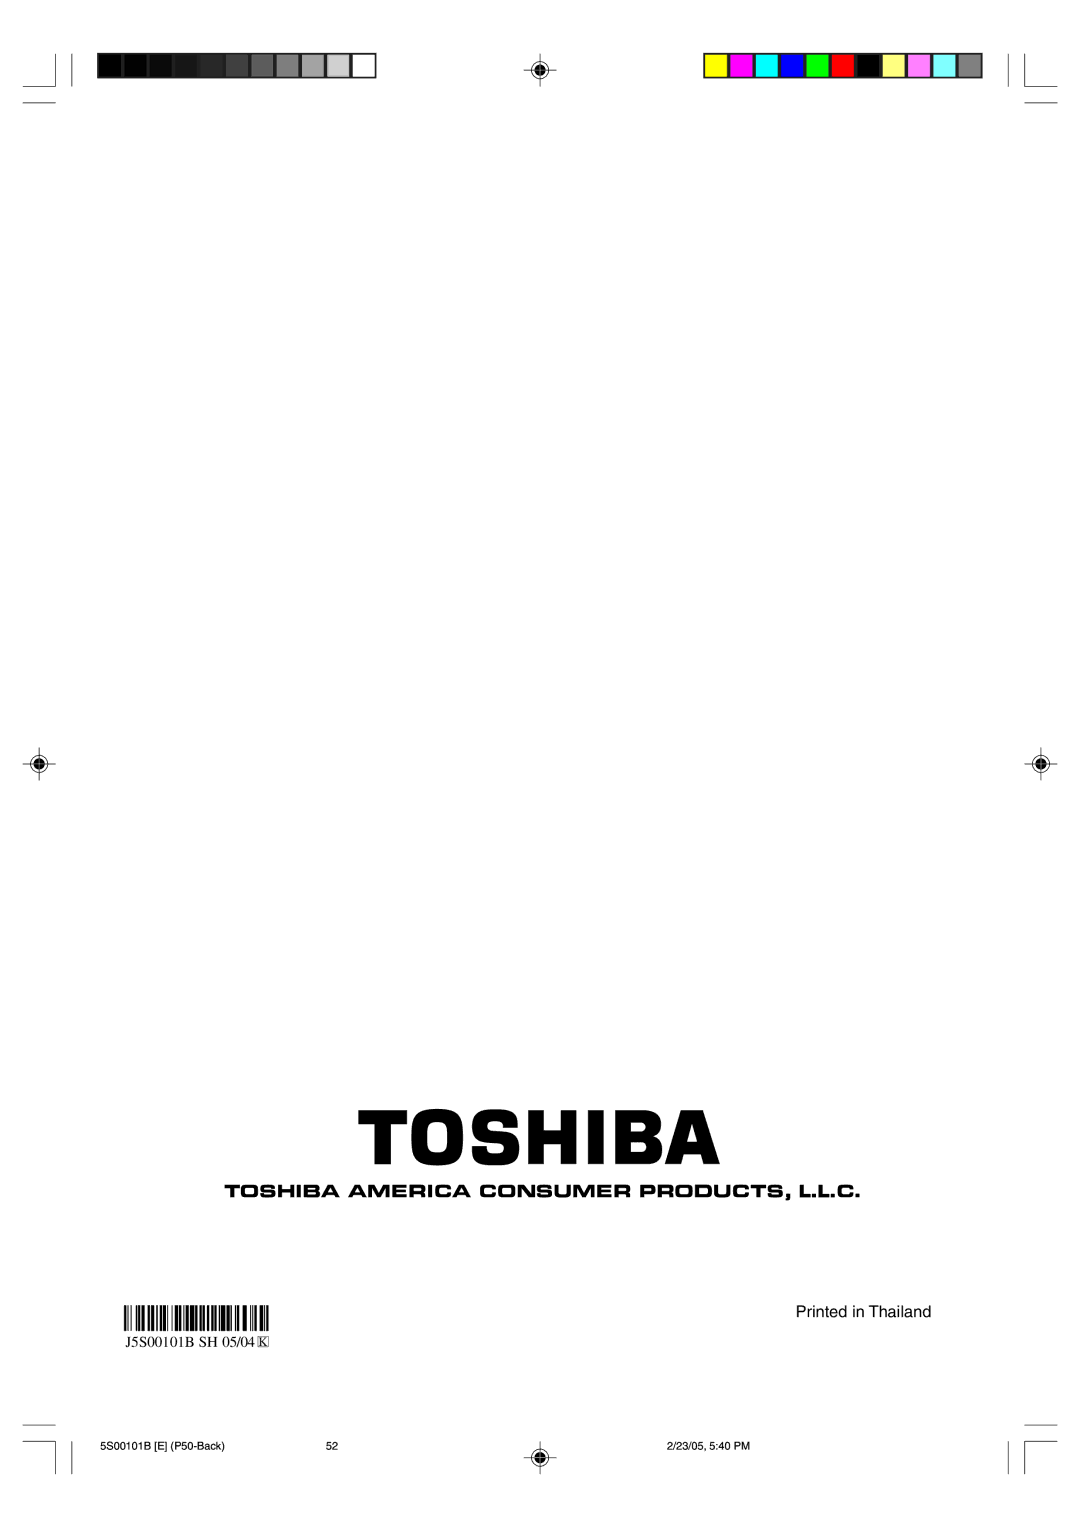 Toshiba MD14F51 owner manual J5S00101B SH 05/04 K 